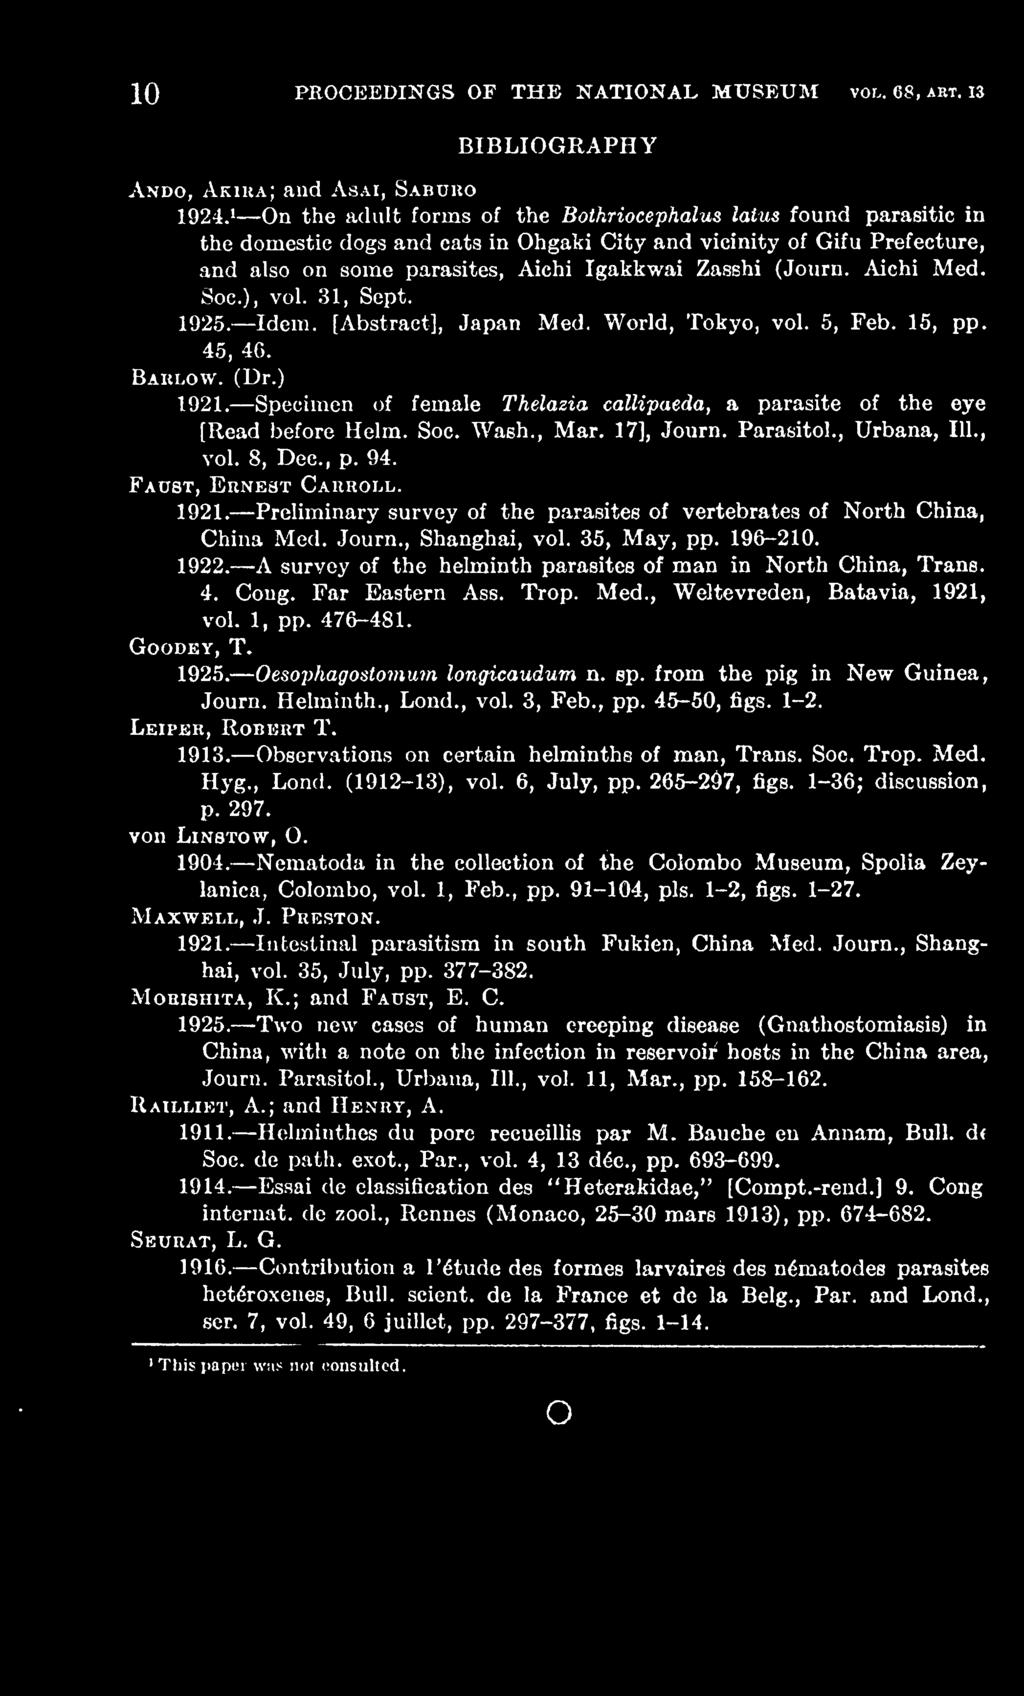 Preliminary survey of the parasites of vertebrates of North China, China Med. Journ., Shanghai, vol. 35, May, pp. 196-210, 1922. ^A survey of the helminth parasites of man in North China, Trans.